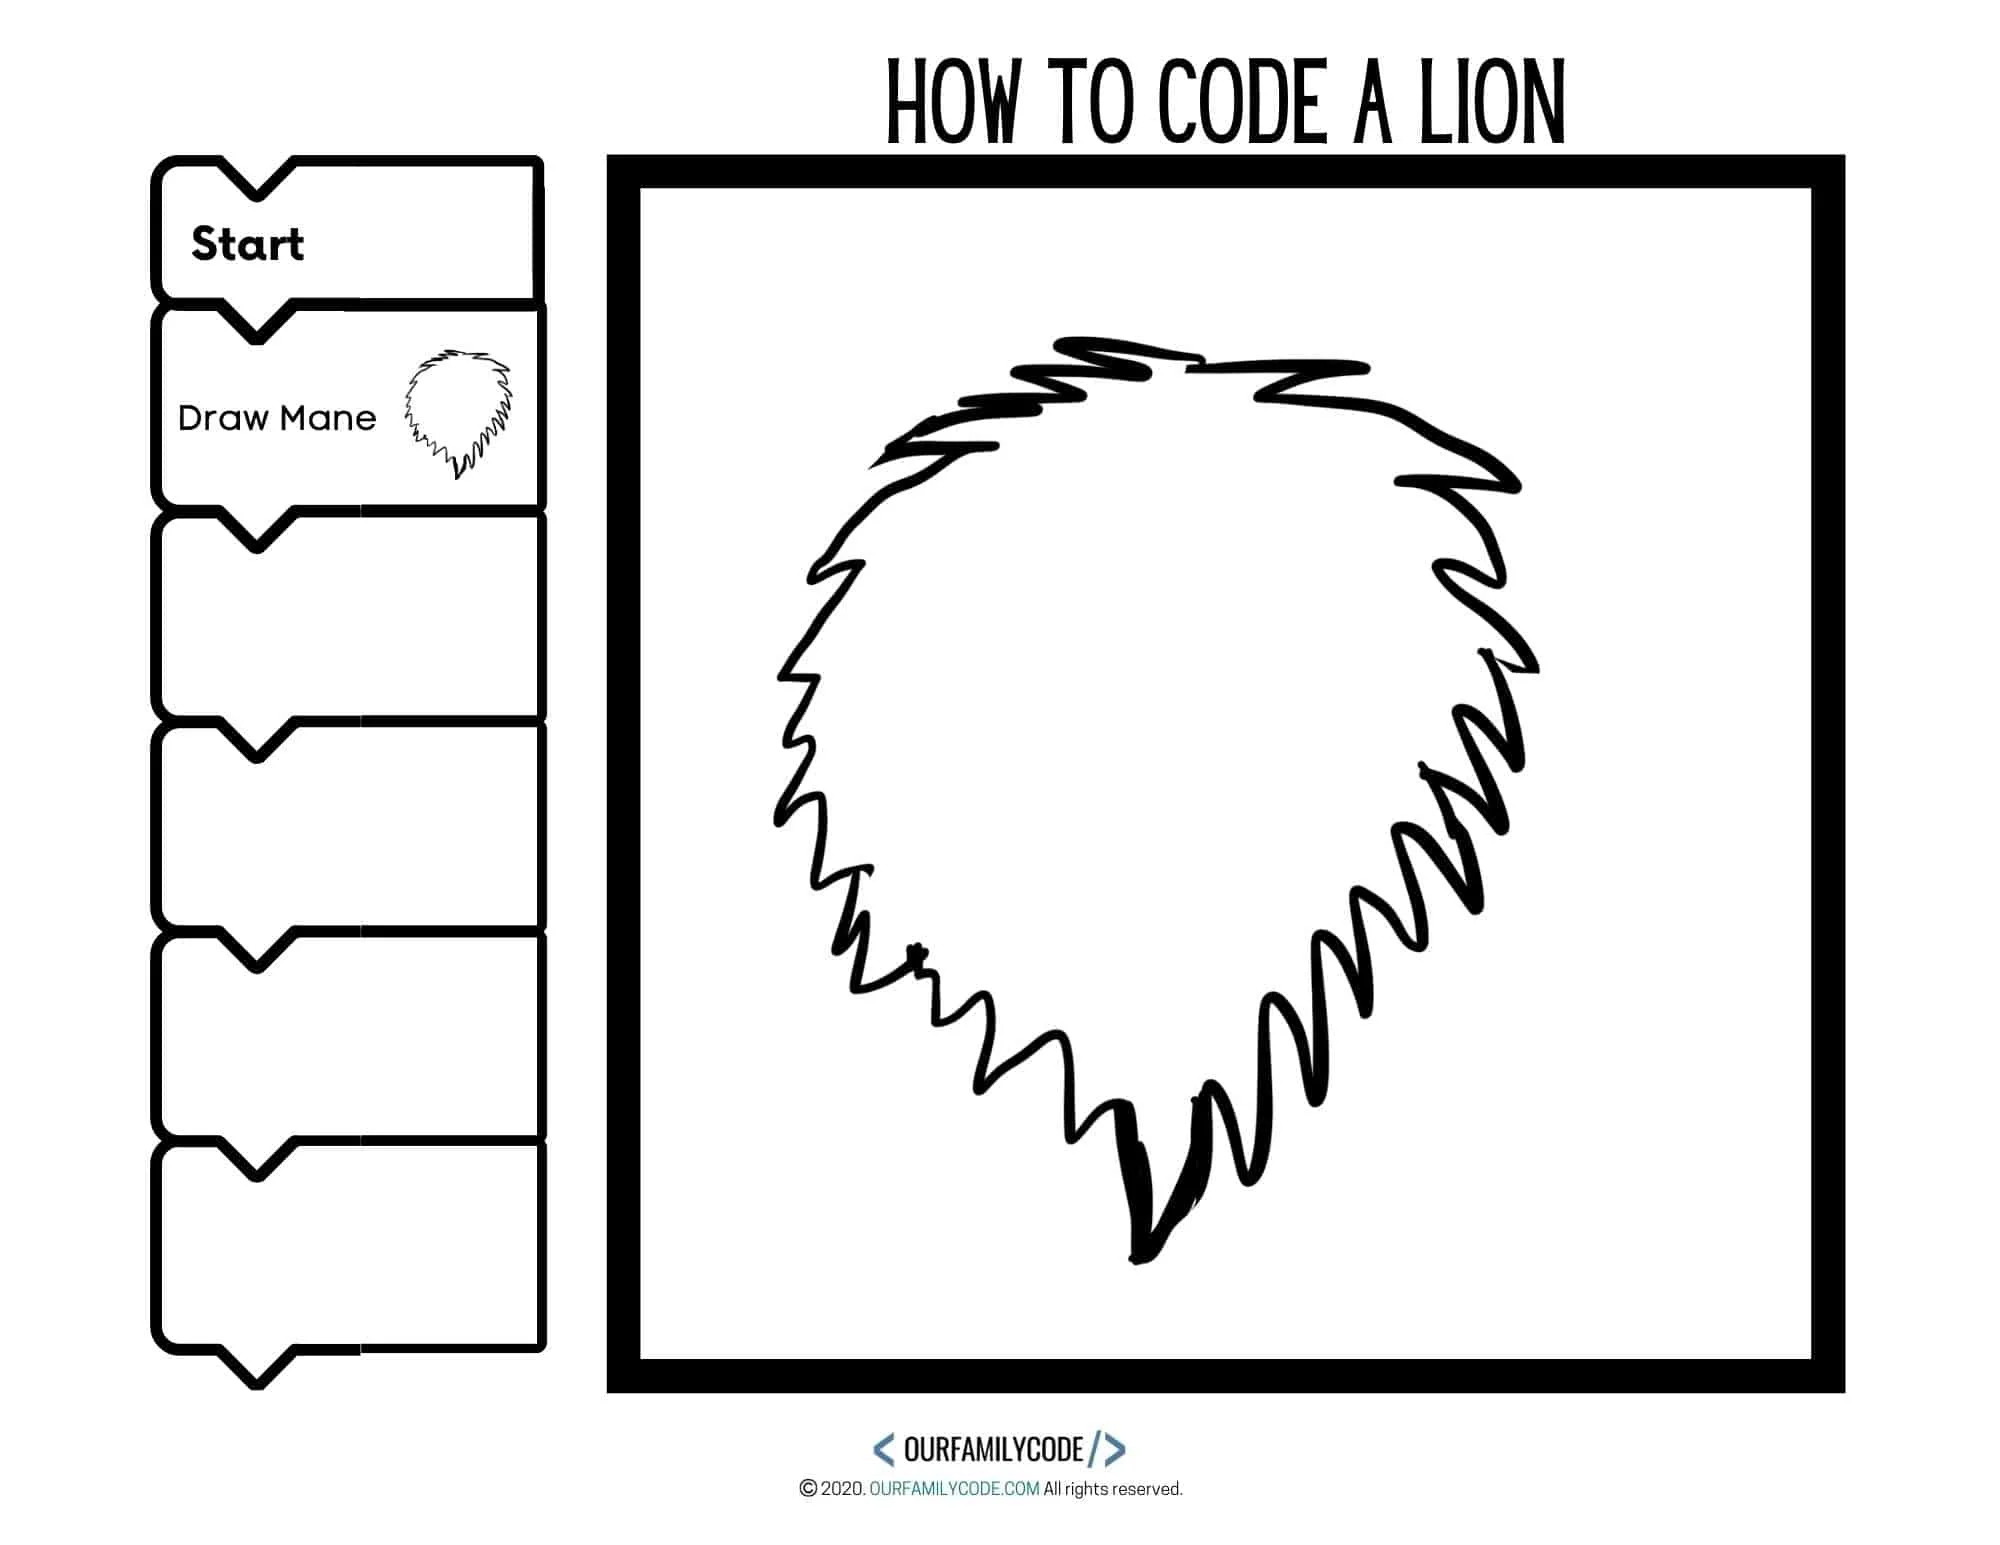 draw mane directed drawing algorithm art lion coding activity